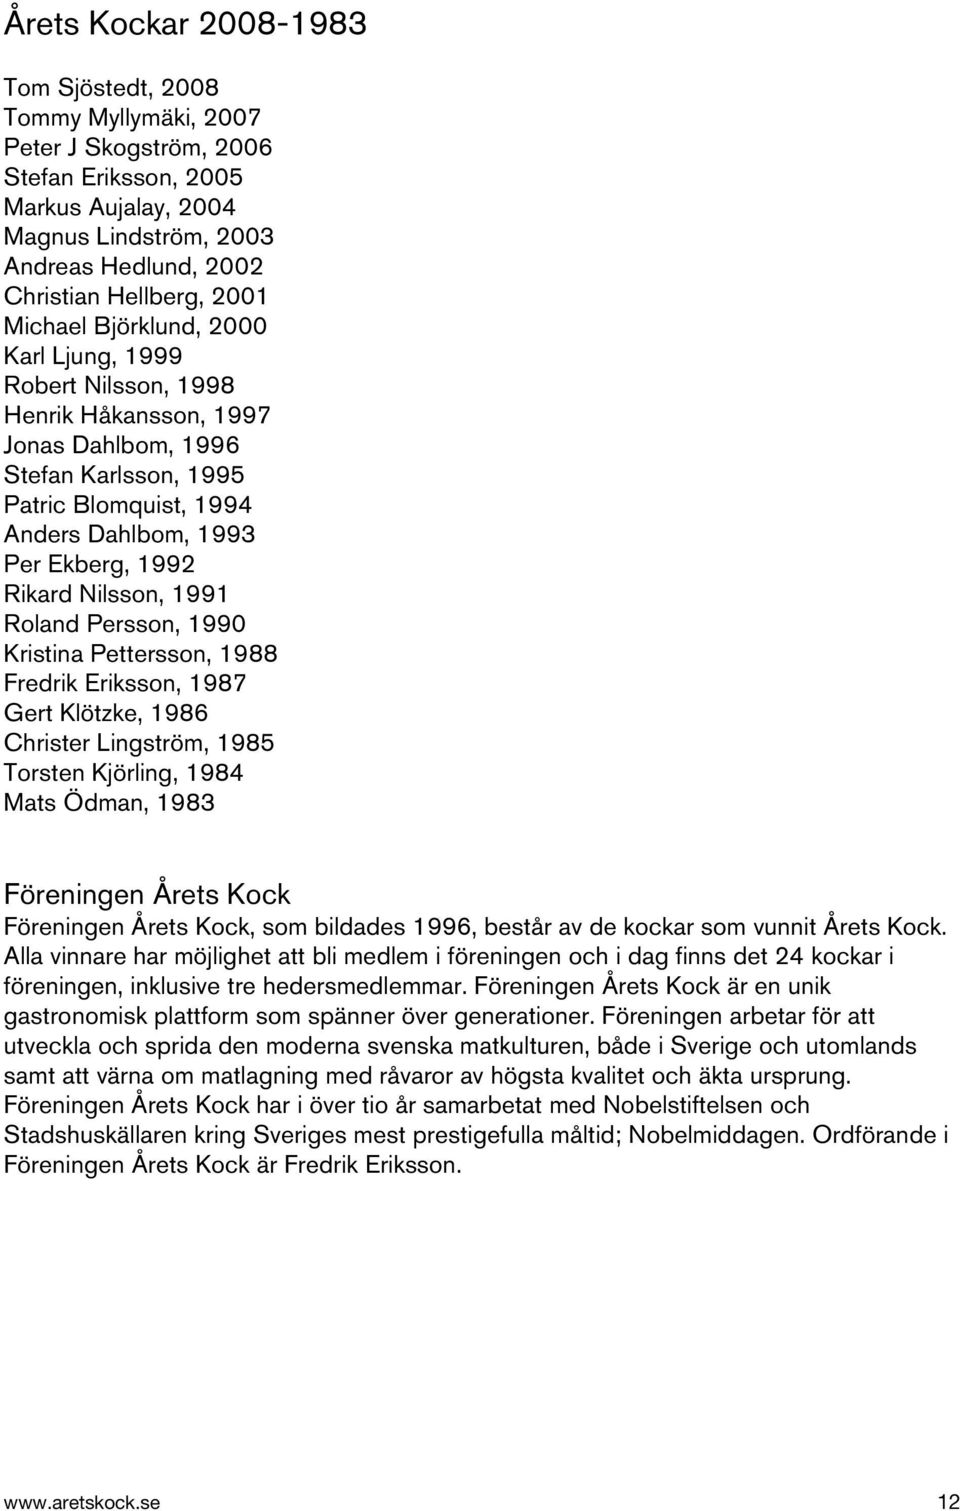 Nilsson, 1991 Roland Persson, 1990 Kristina Pettersson, 1988 Fredrik Eriksson, 1987 Gert Klötzke, 1986 Christer Lingström, 1985 Torsten Kjörling, 1984 Mats Ödman, 1983 Föreningen Årets Kock